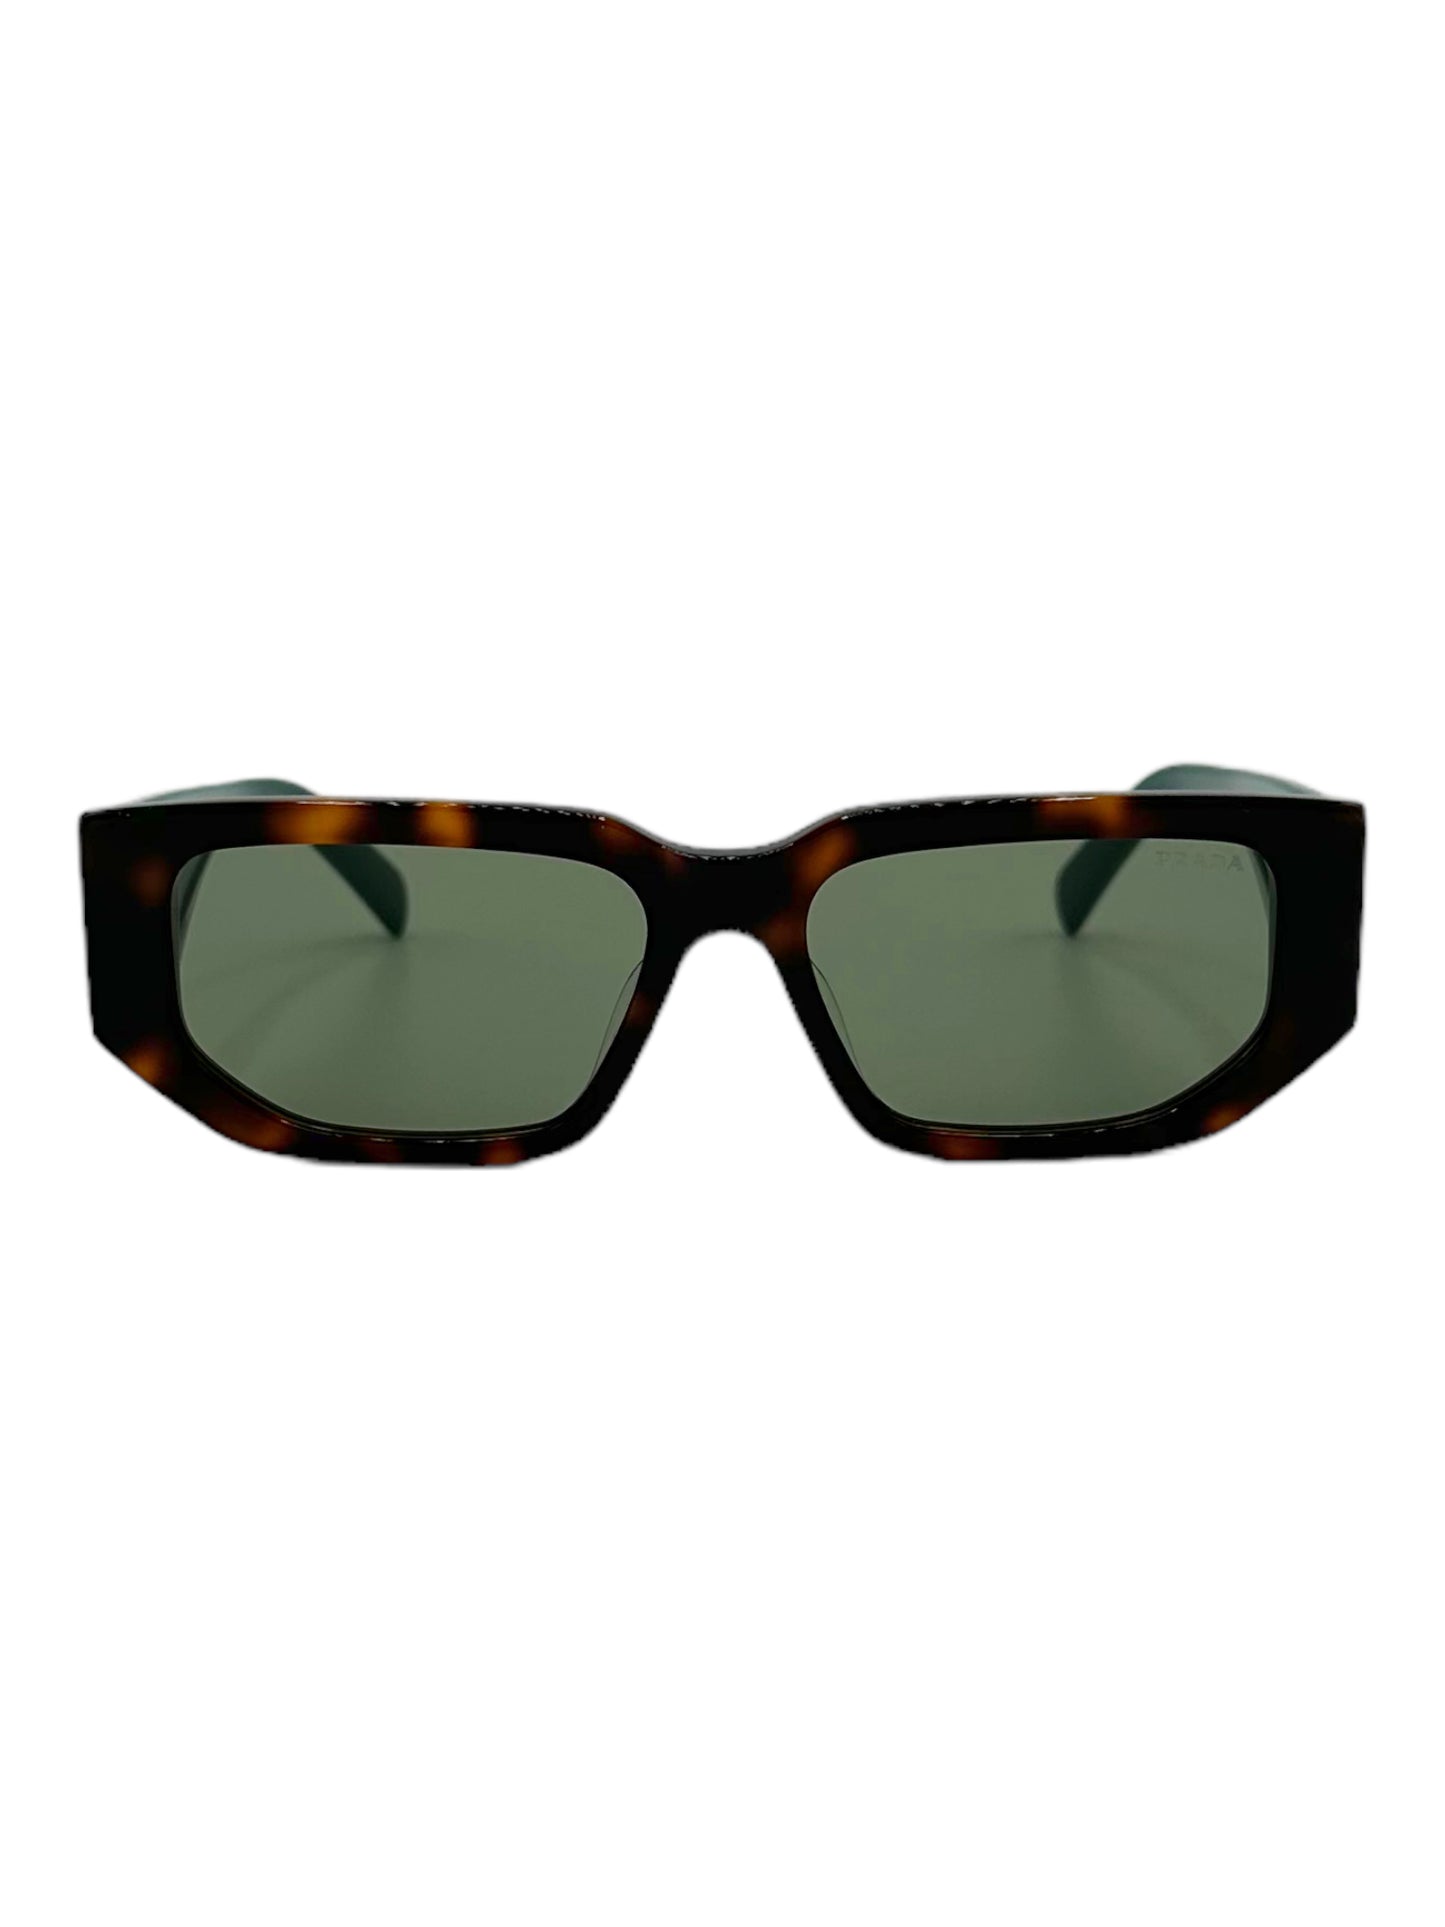 Prada Tortoise Emerald SPR 09Z Sunglasses - Genuine Design Luxury Consignment for Men. New & Pre-Owned Clothing, Shoes, & Accessories. Calgary, Canada